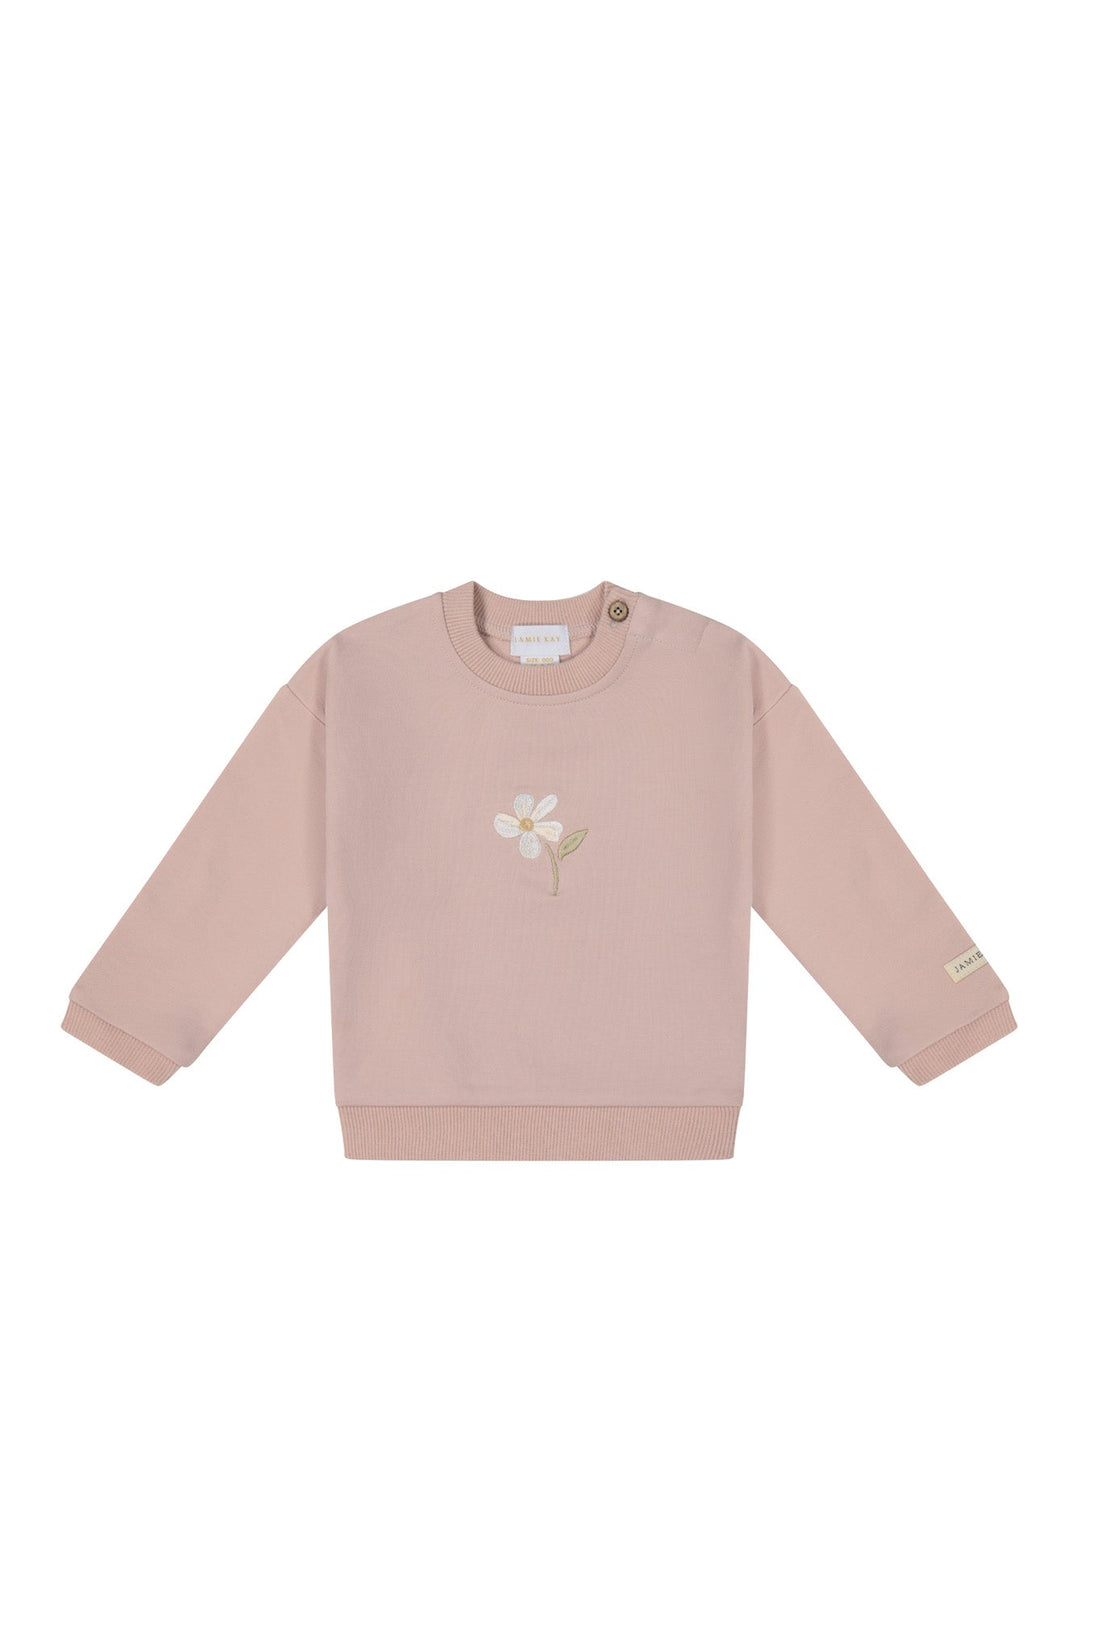 Organic Cotton Bobbie Sweatshirt - Dusky Rose